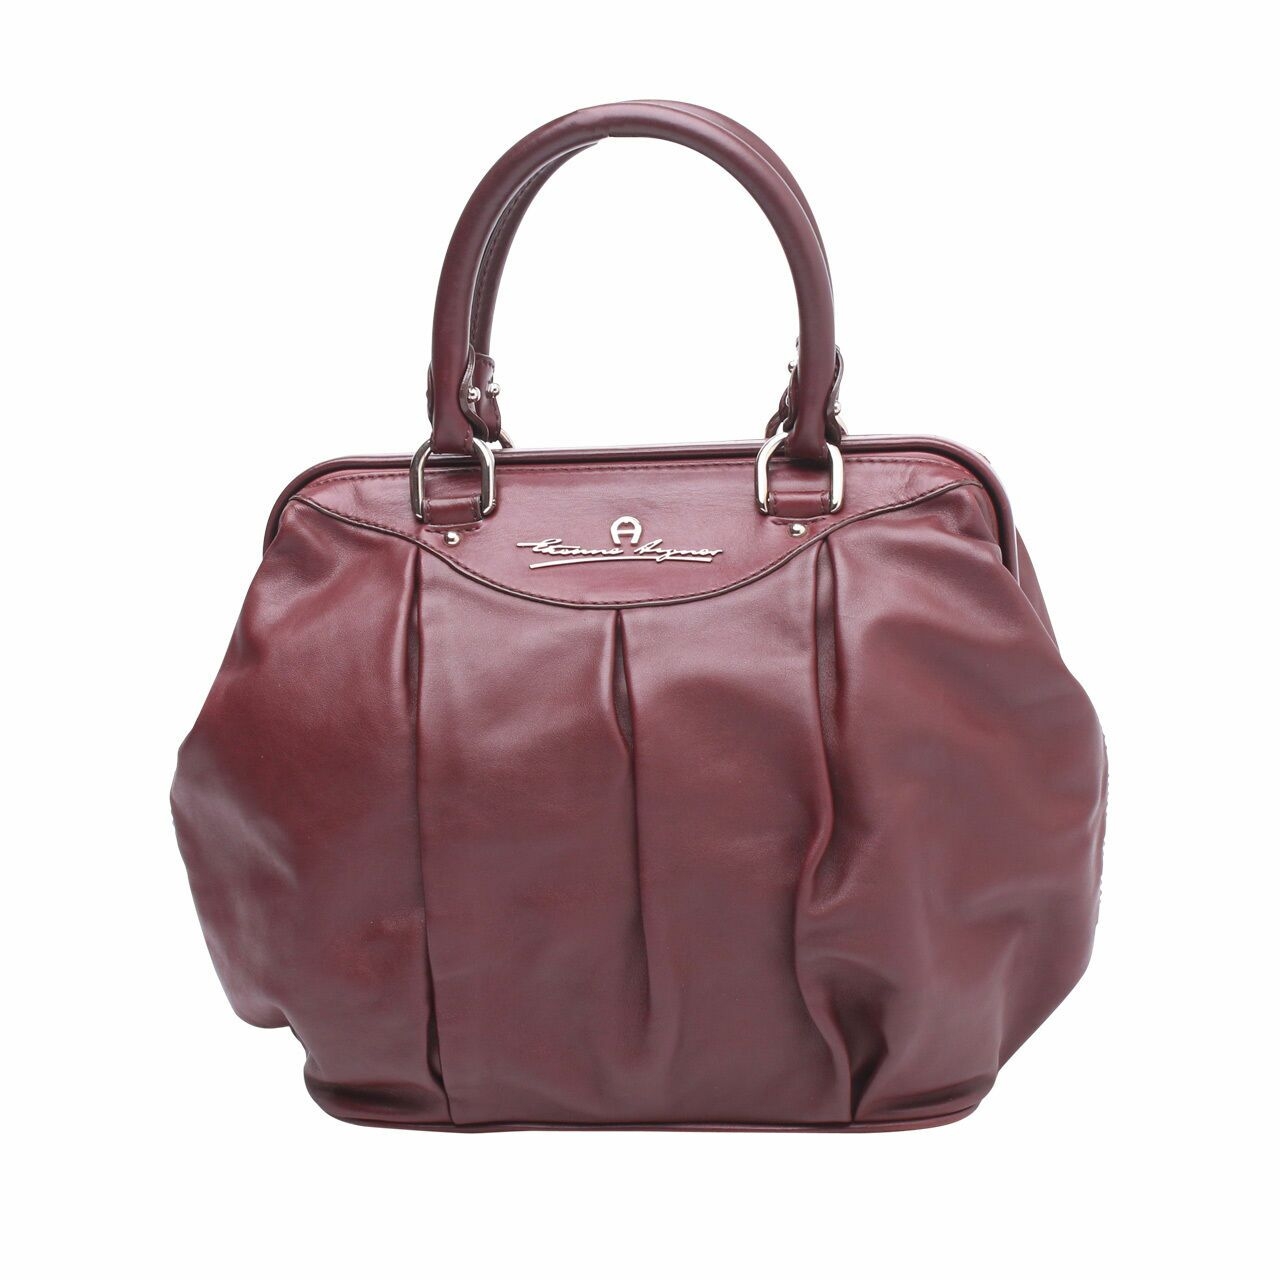 ETIENNE AIGNER Maroon Handbag